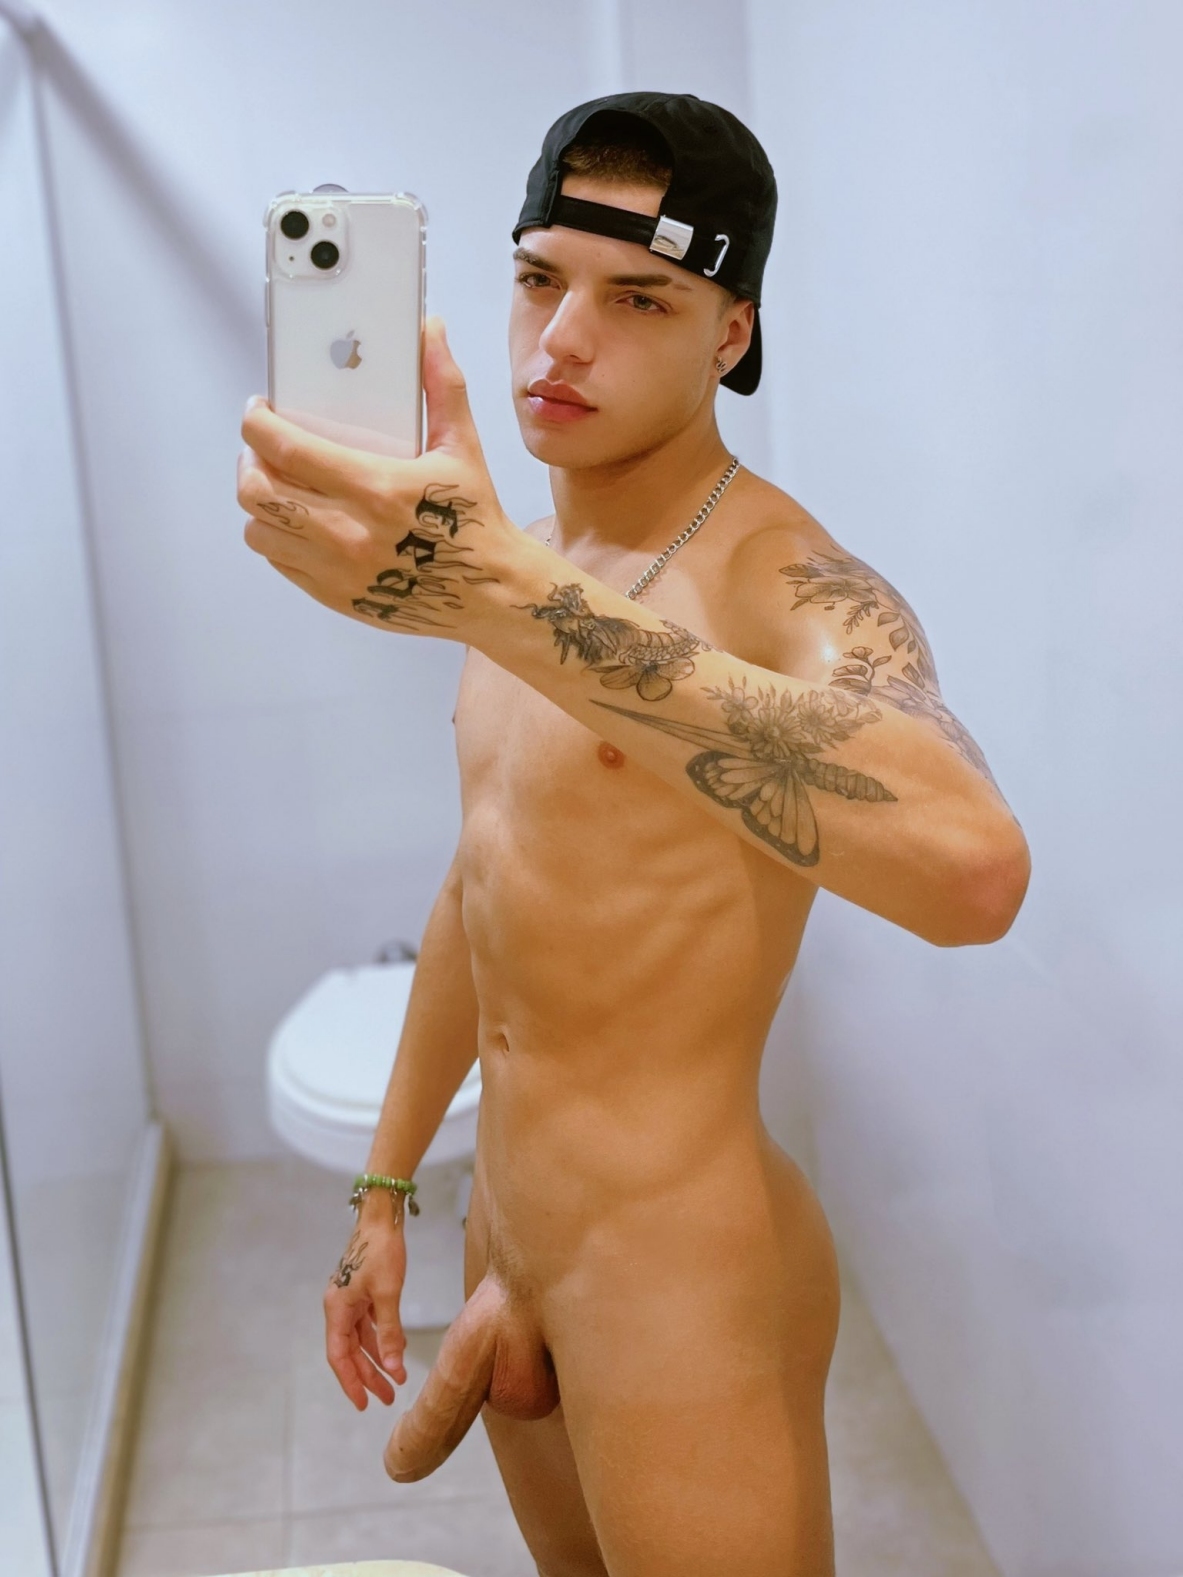 Hung nude Latino boy